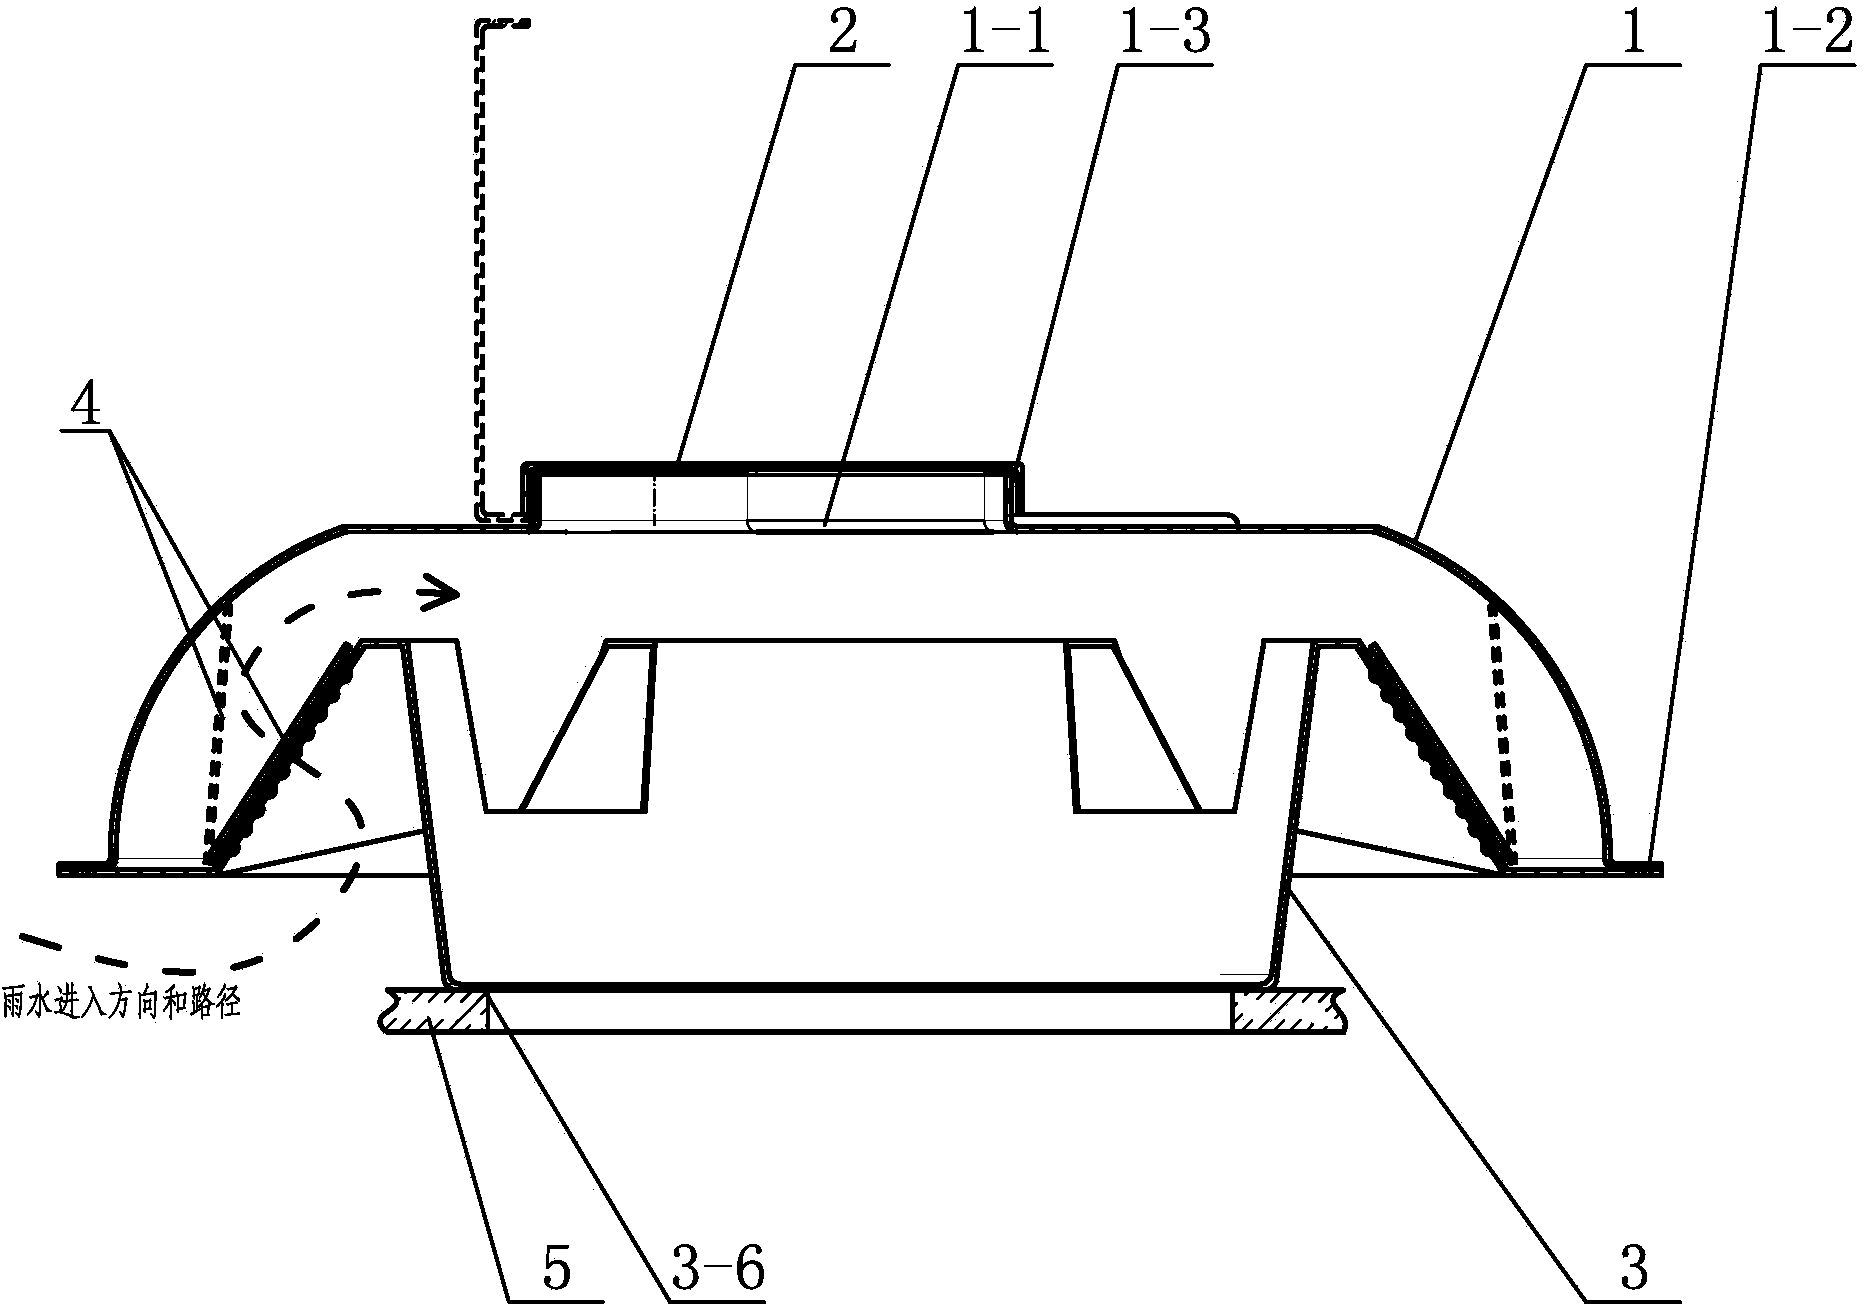 Ventilation device on top of radome